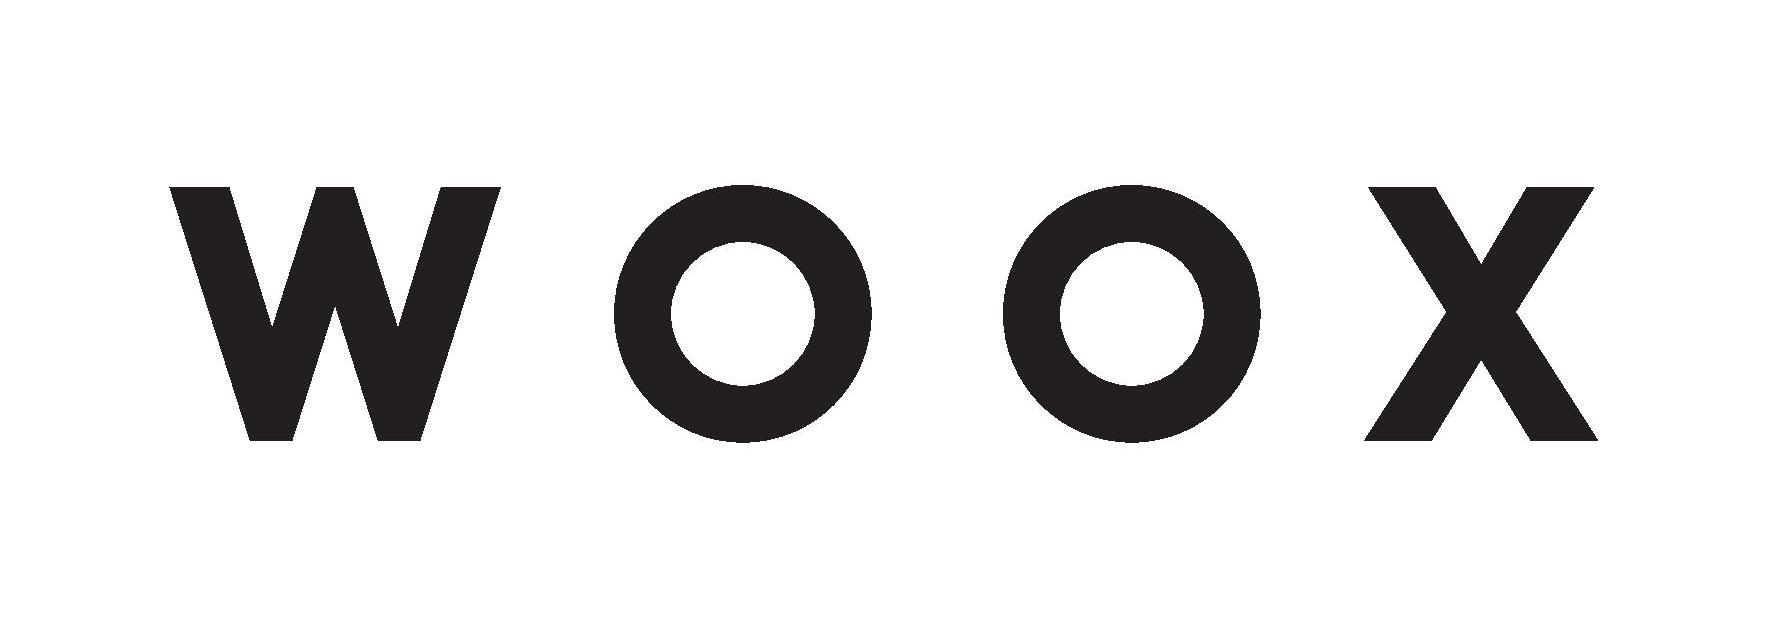 woox-logo-black-cmyk-page-001.jpg